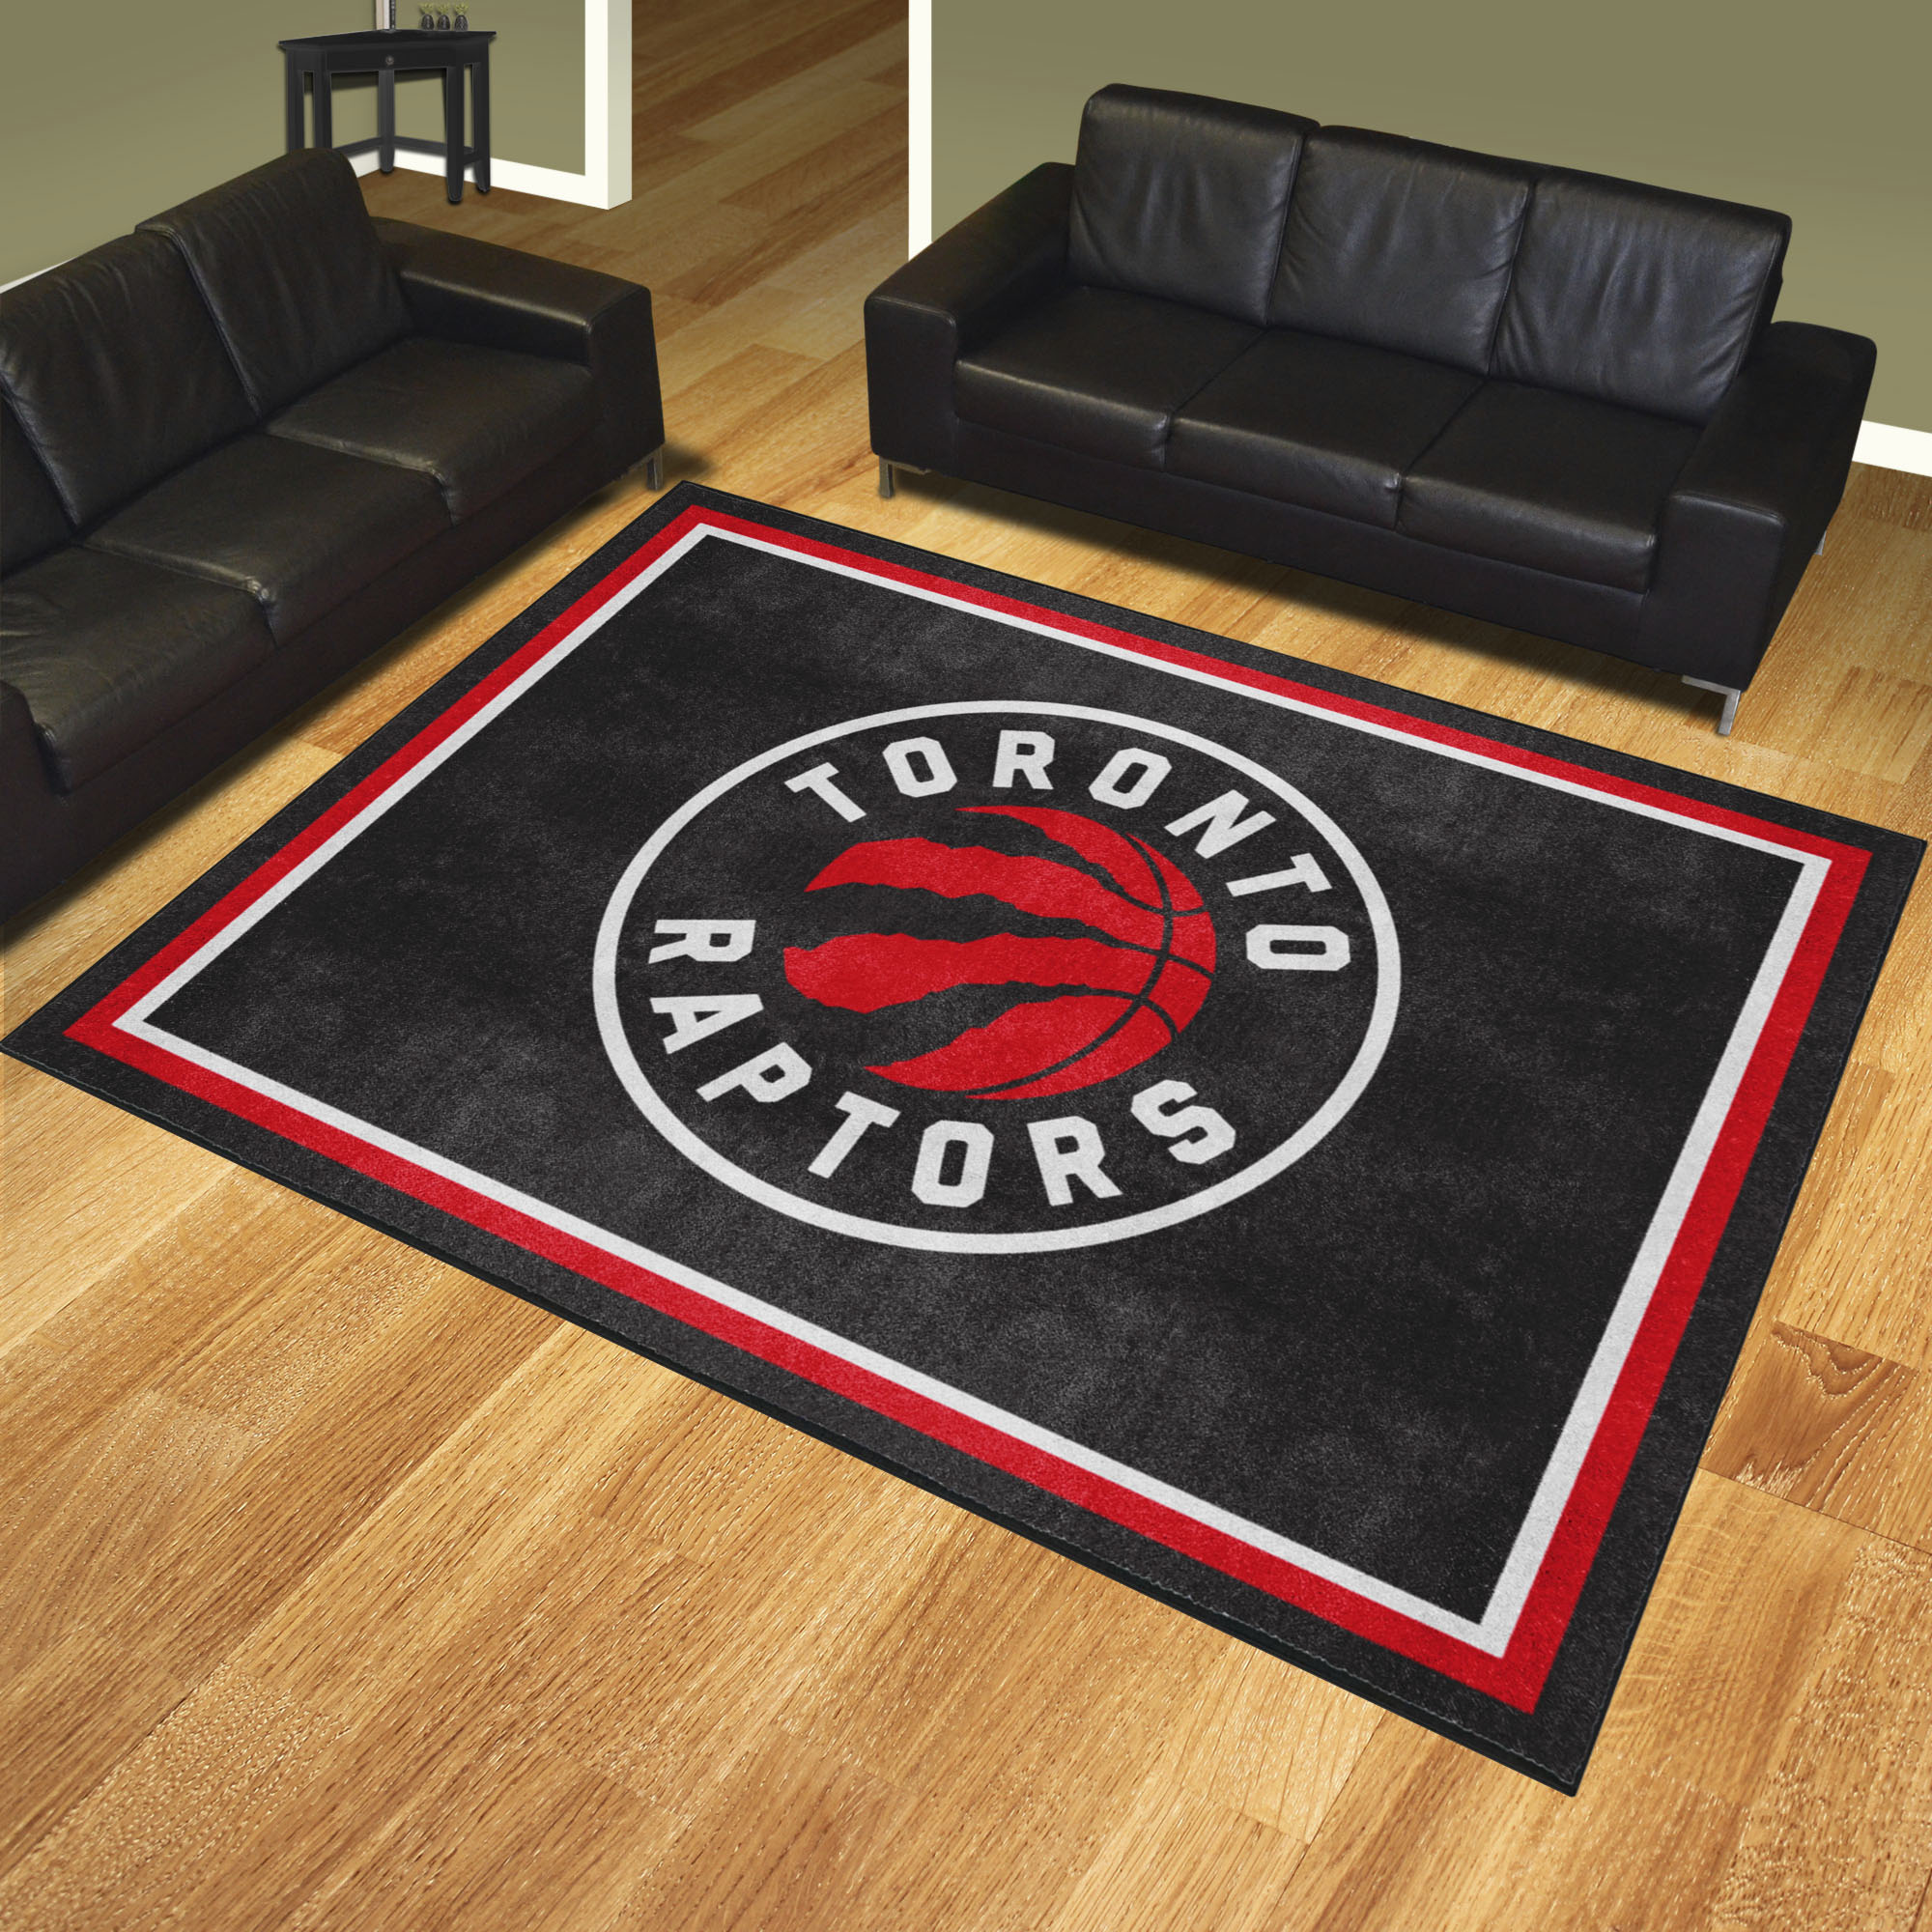 Toronto Raptors Area Rug - 8' x 10' Global Logo Nylon